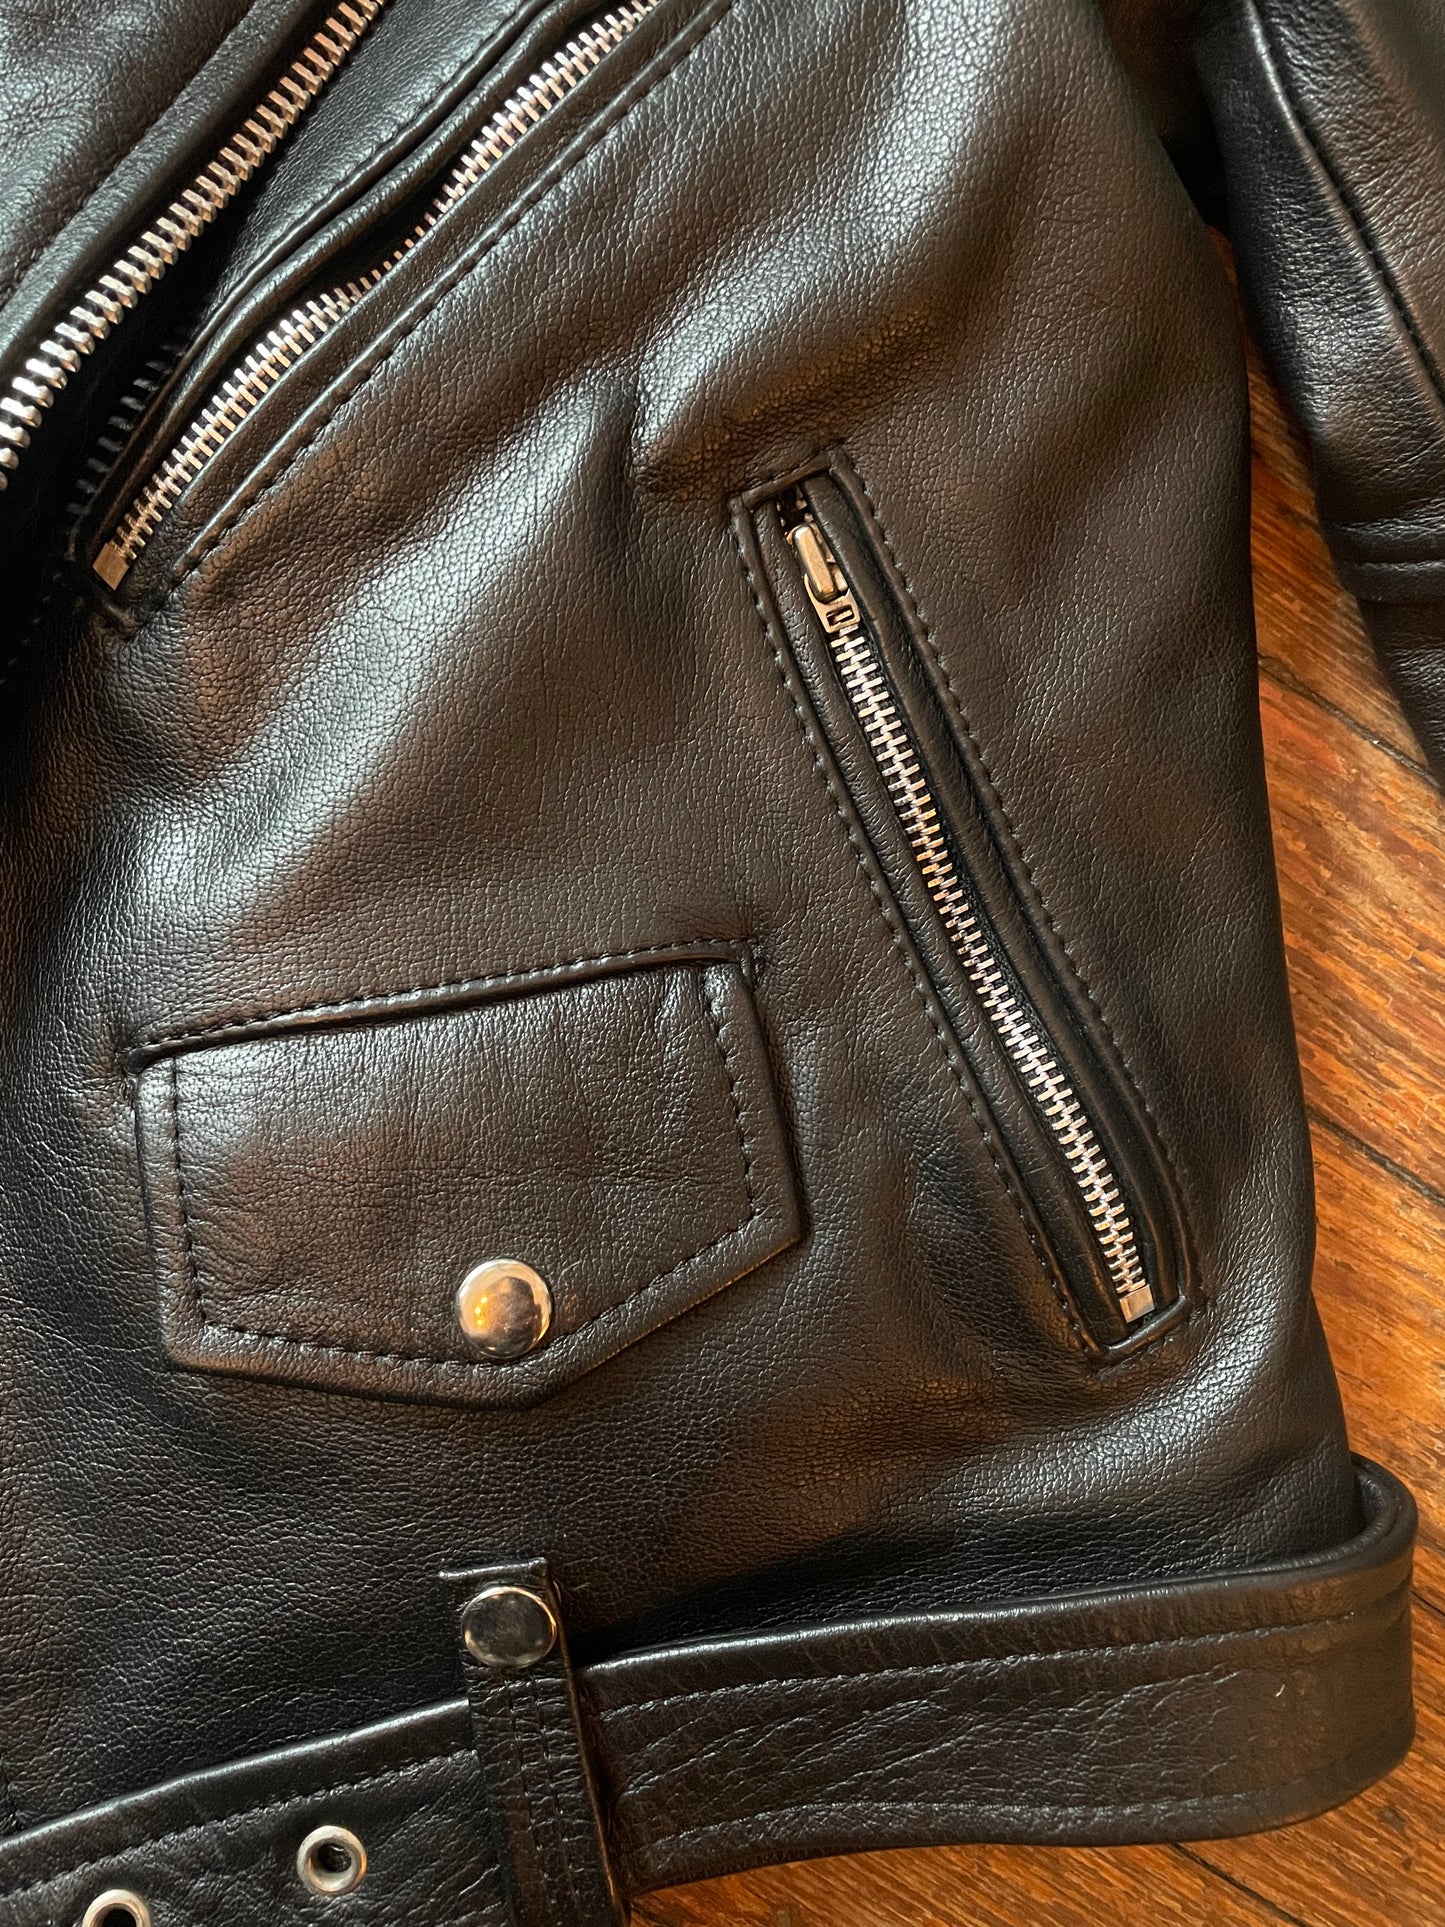 Straight To Hell Black Leather Commando Moto Jacket